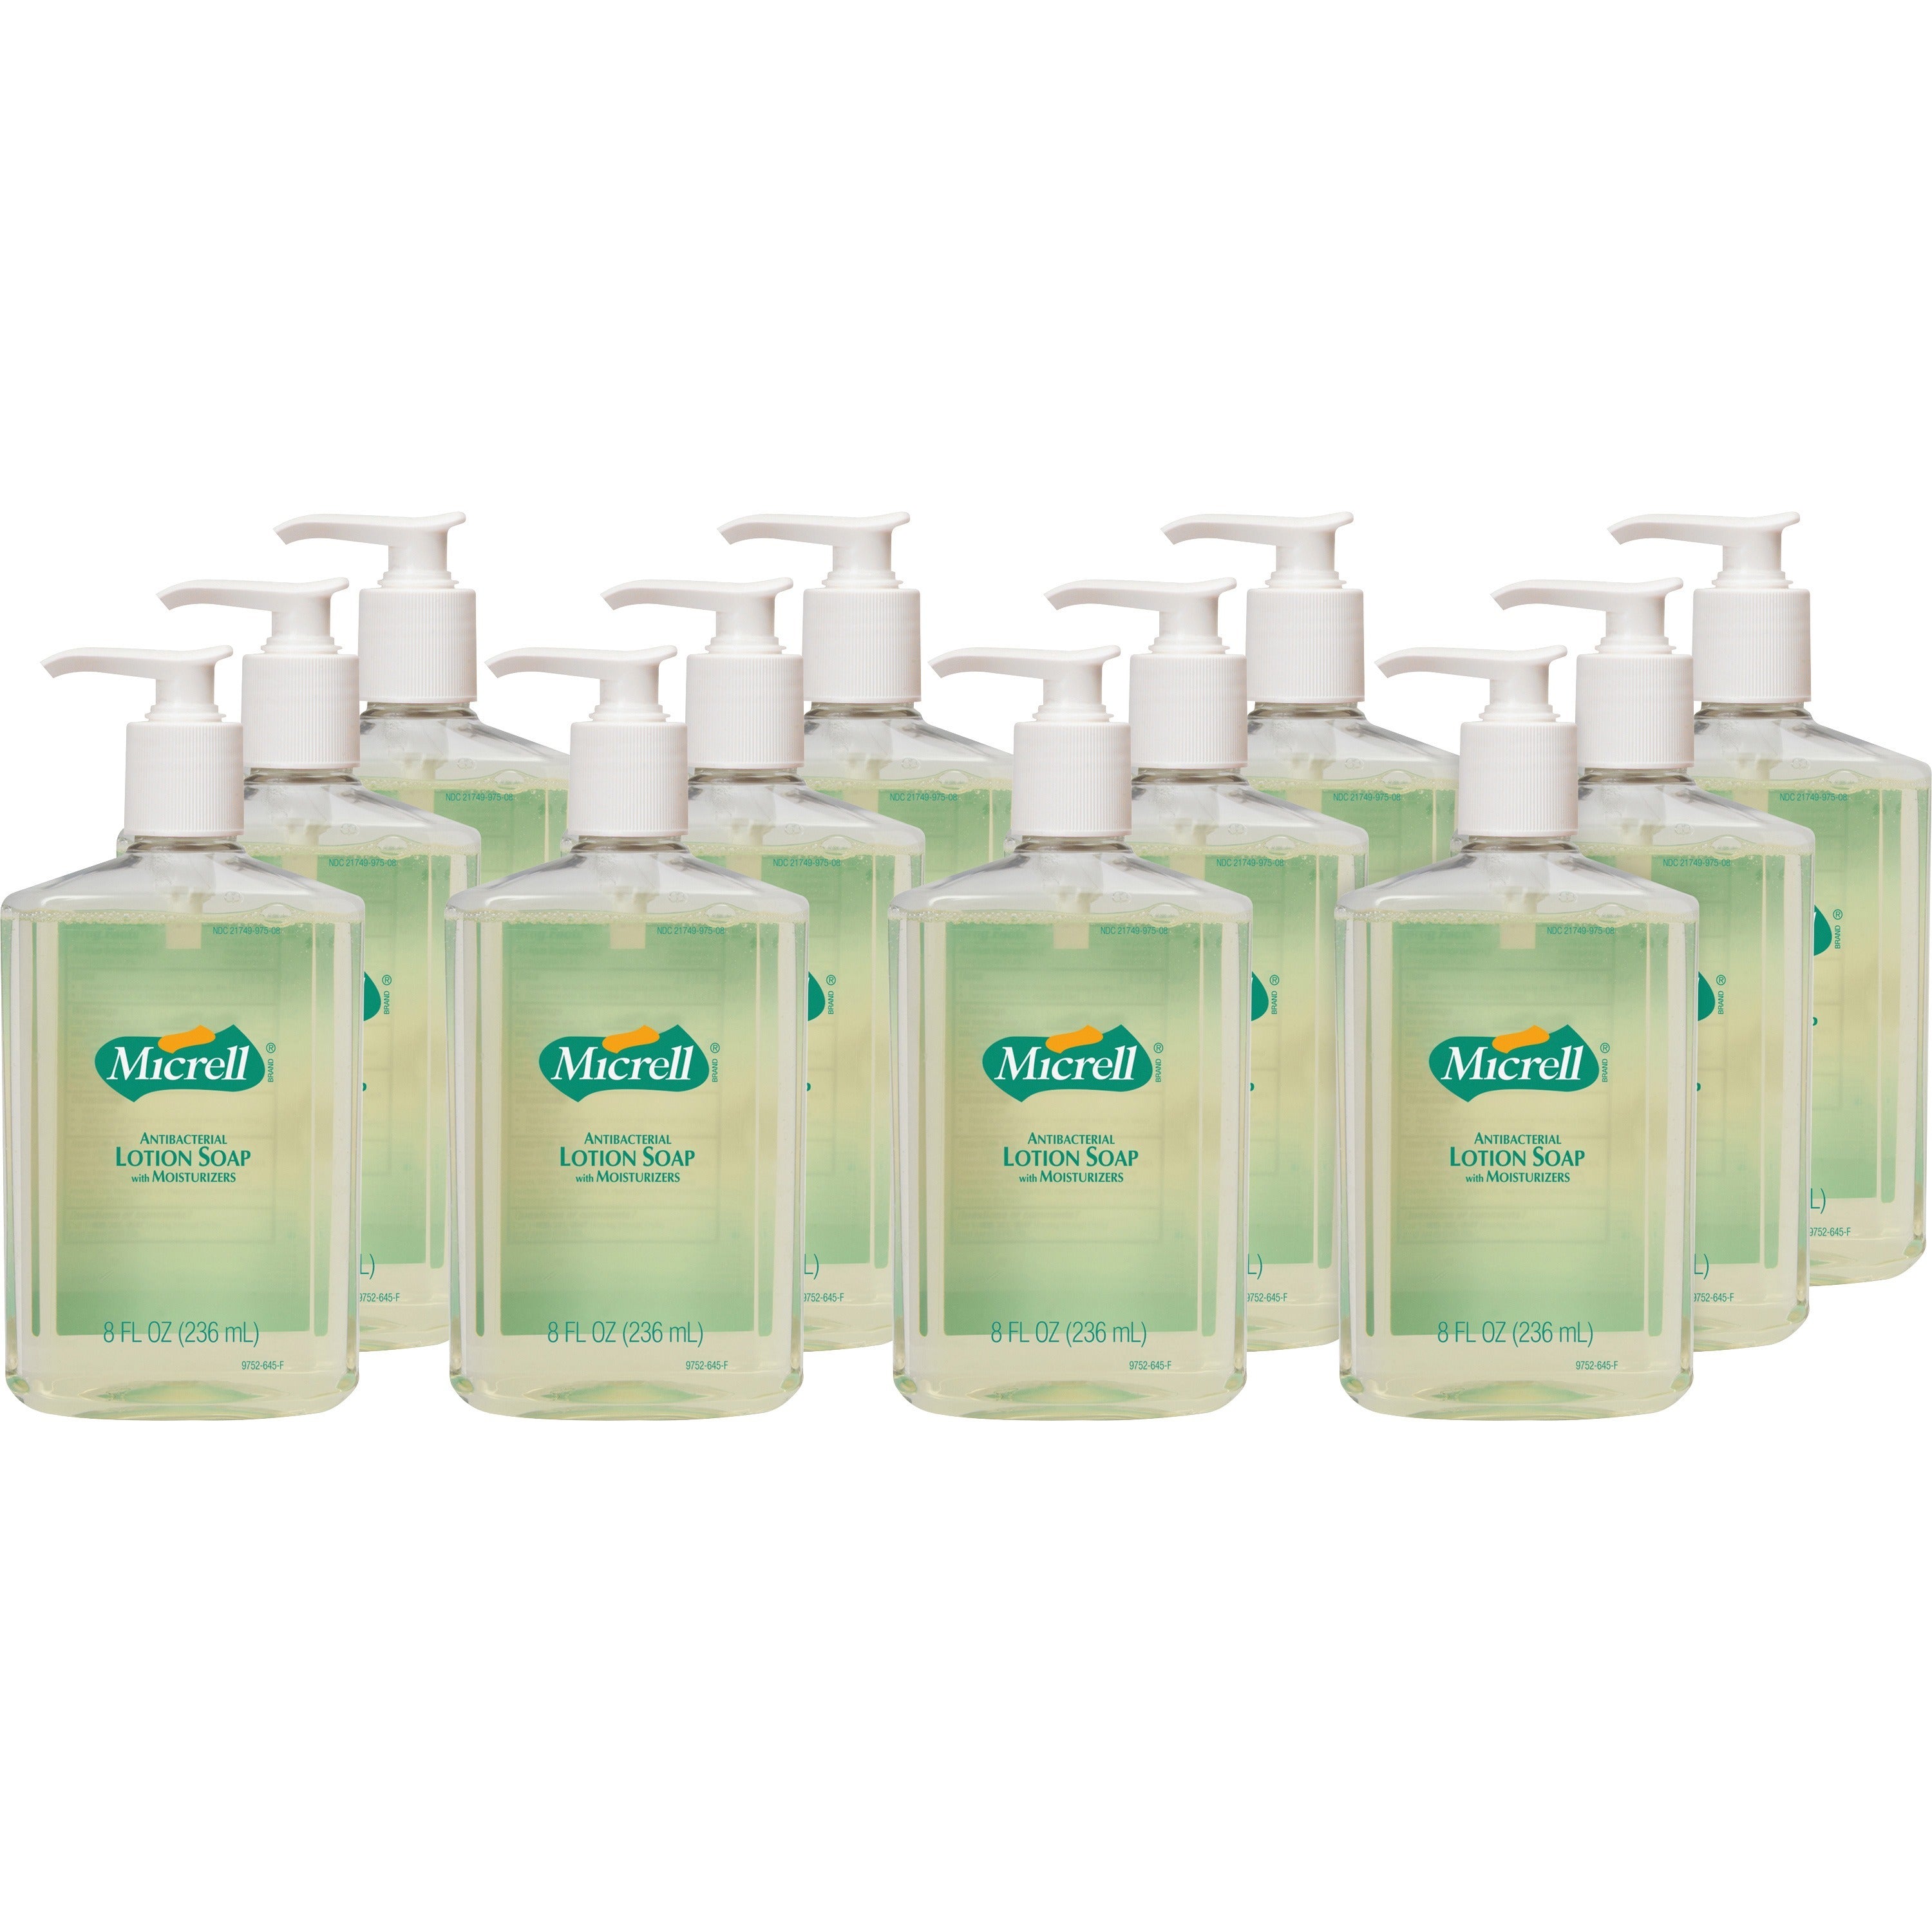 micrell-antibacterial-lotion-soap-citrus-scentfor-8-fl-oz-2366-ml-pump-bottle-dispenser-kill-germs-grease-remover-hand-anti-irritant-bio-based-12-carton_goj975212ct - 1